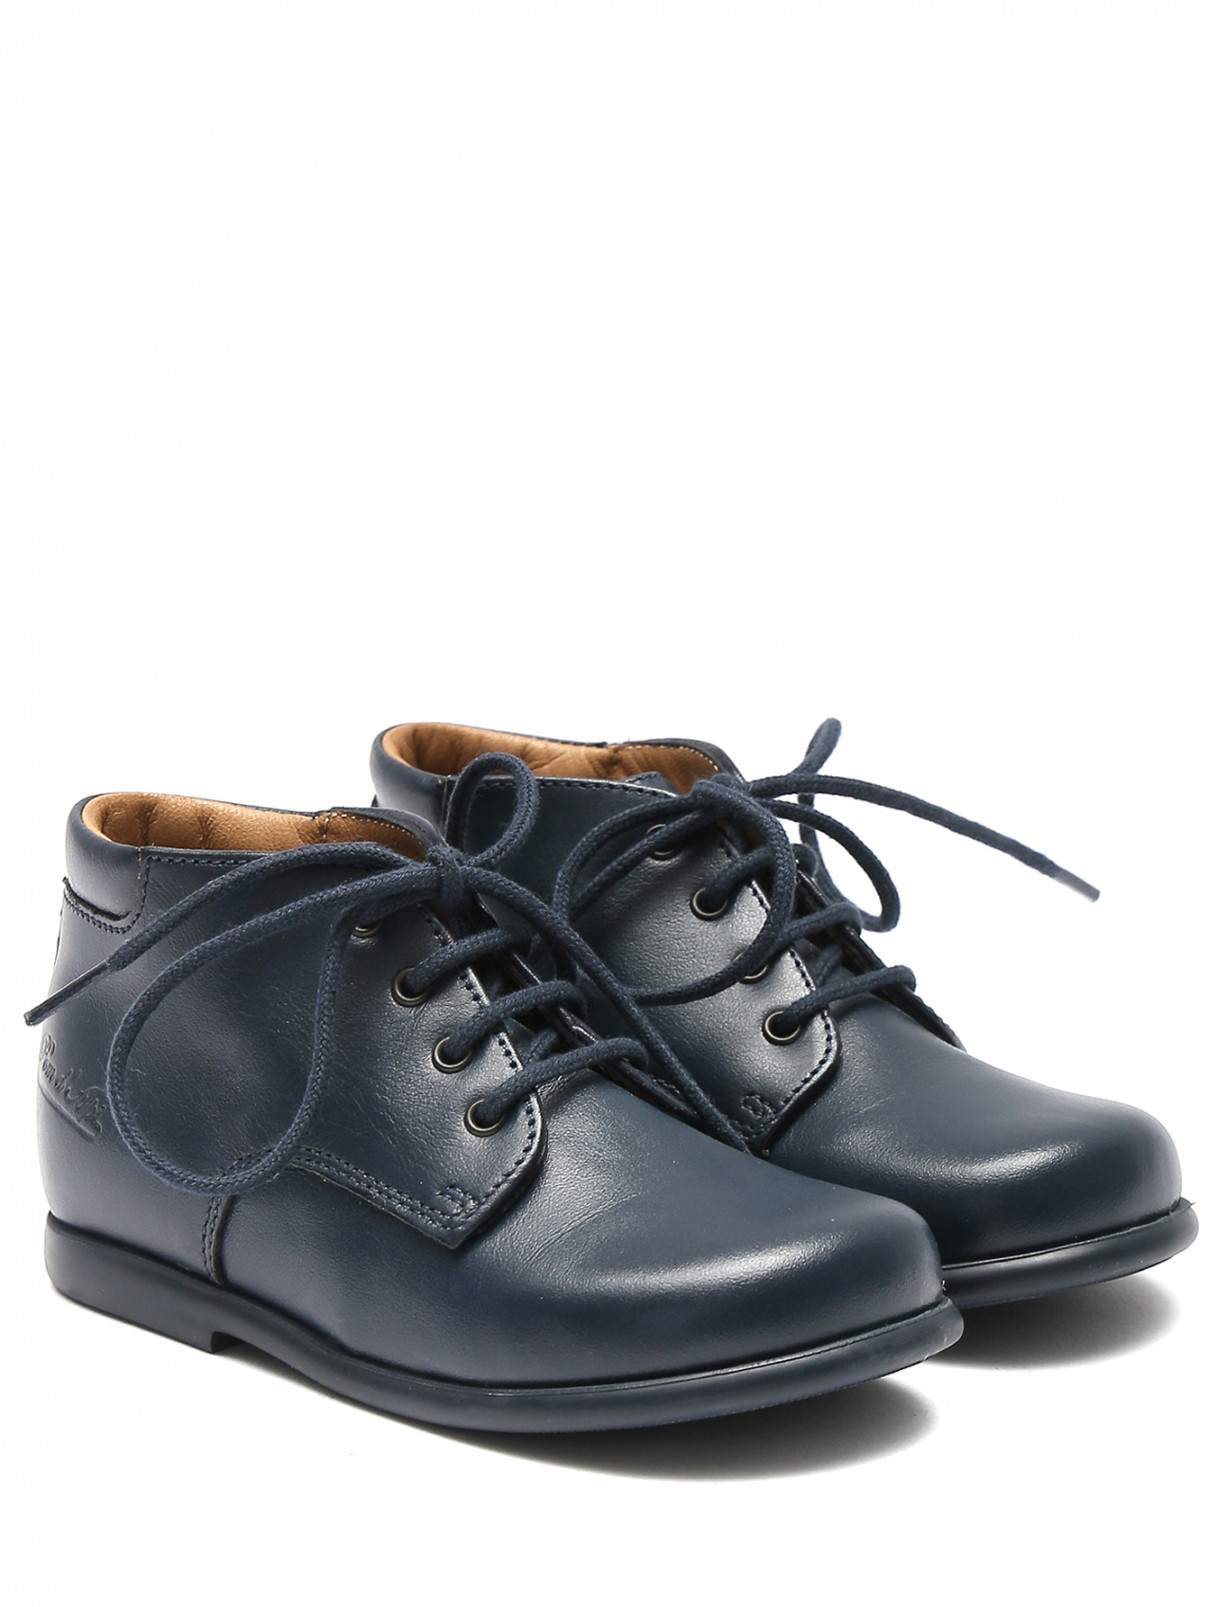 Ботинки из гладкой кожи на шнурках Pom d'Api  –  Общий вид  – Цвет:  Синий